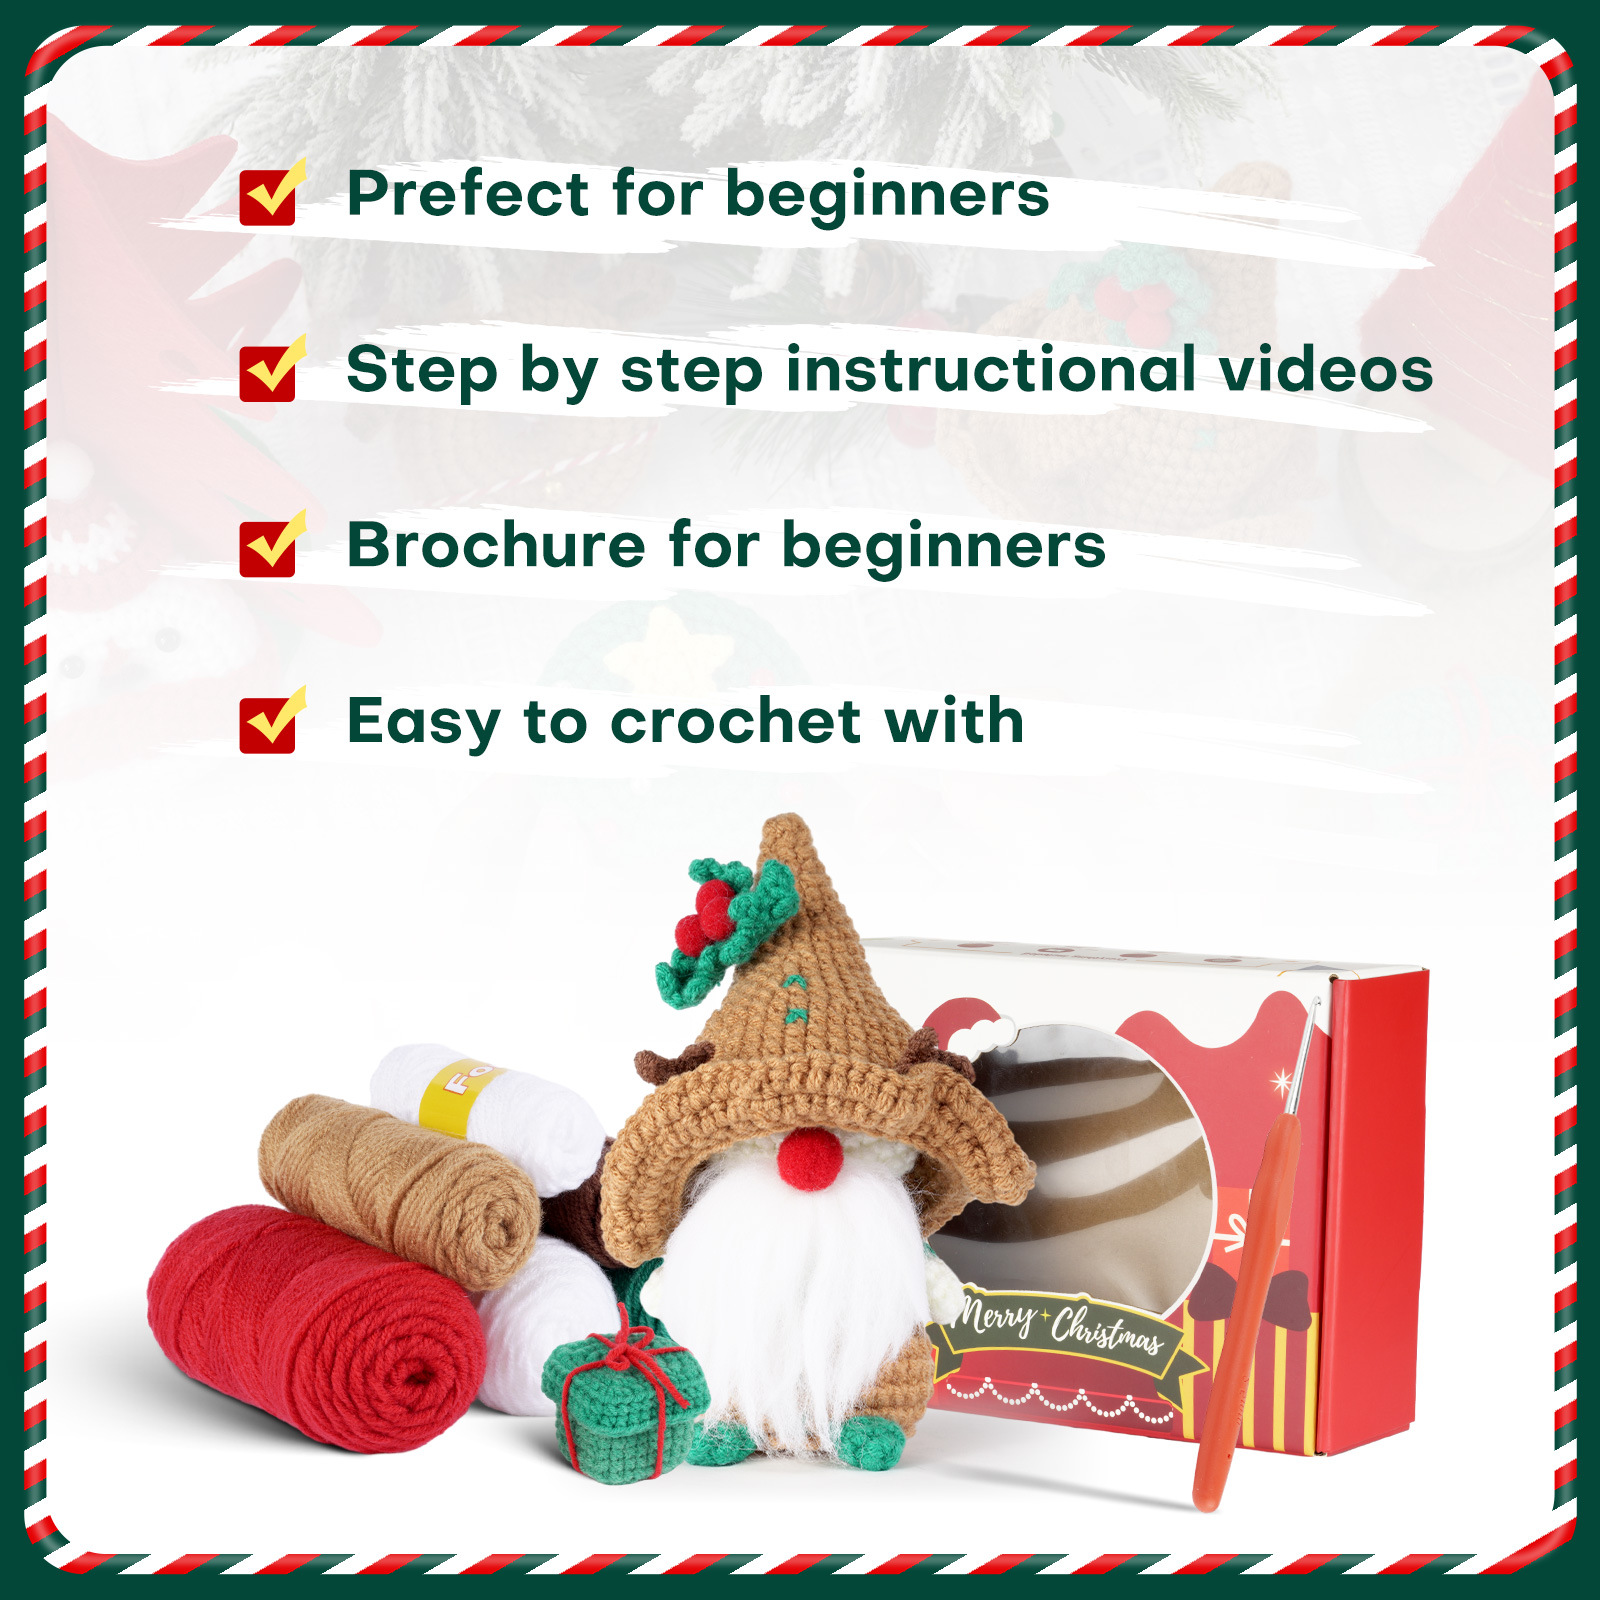 Christmas Crochet Kit For Beginners Portable Learn Xmas GIft To Kits Z4I2